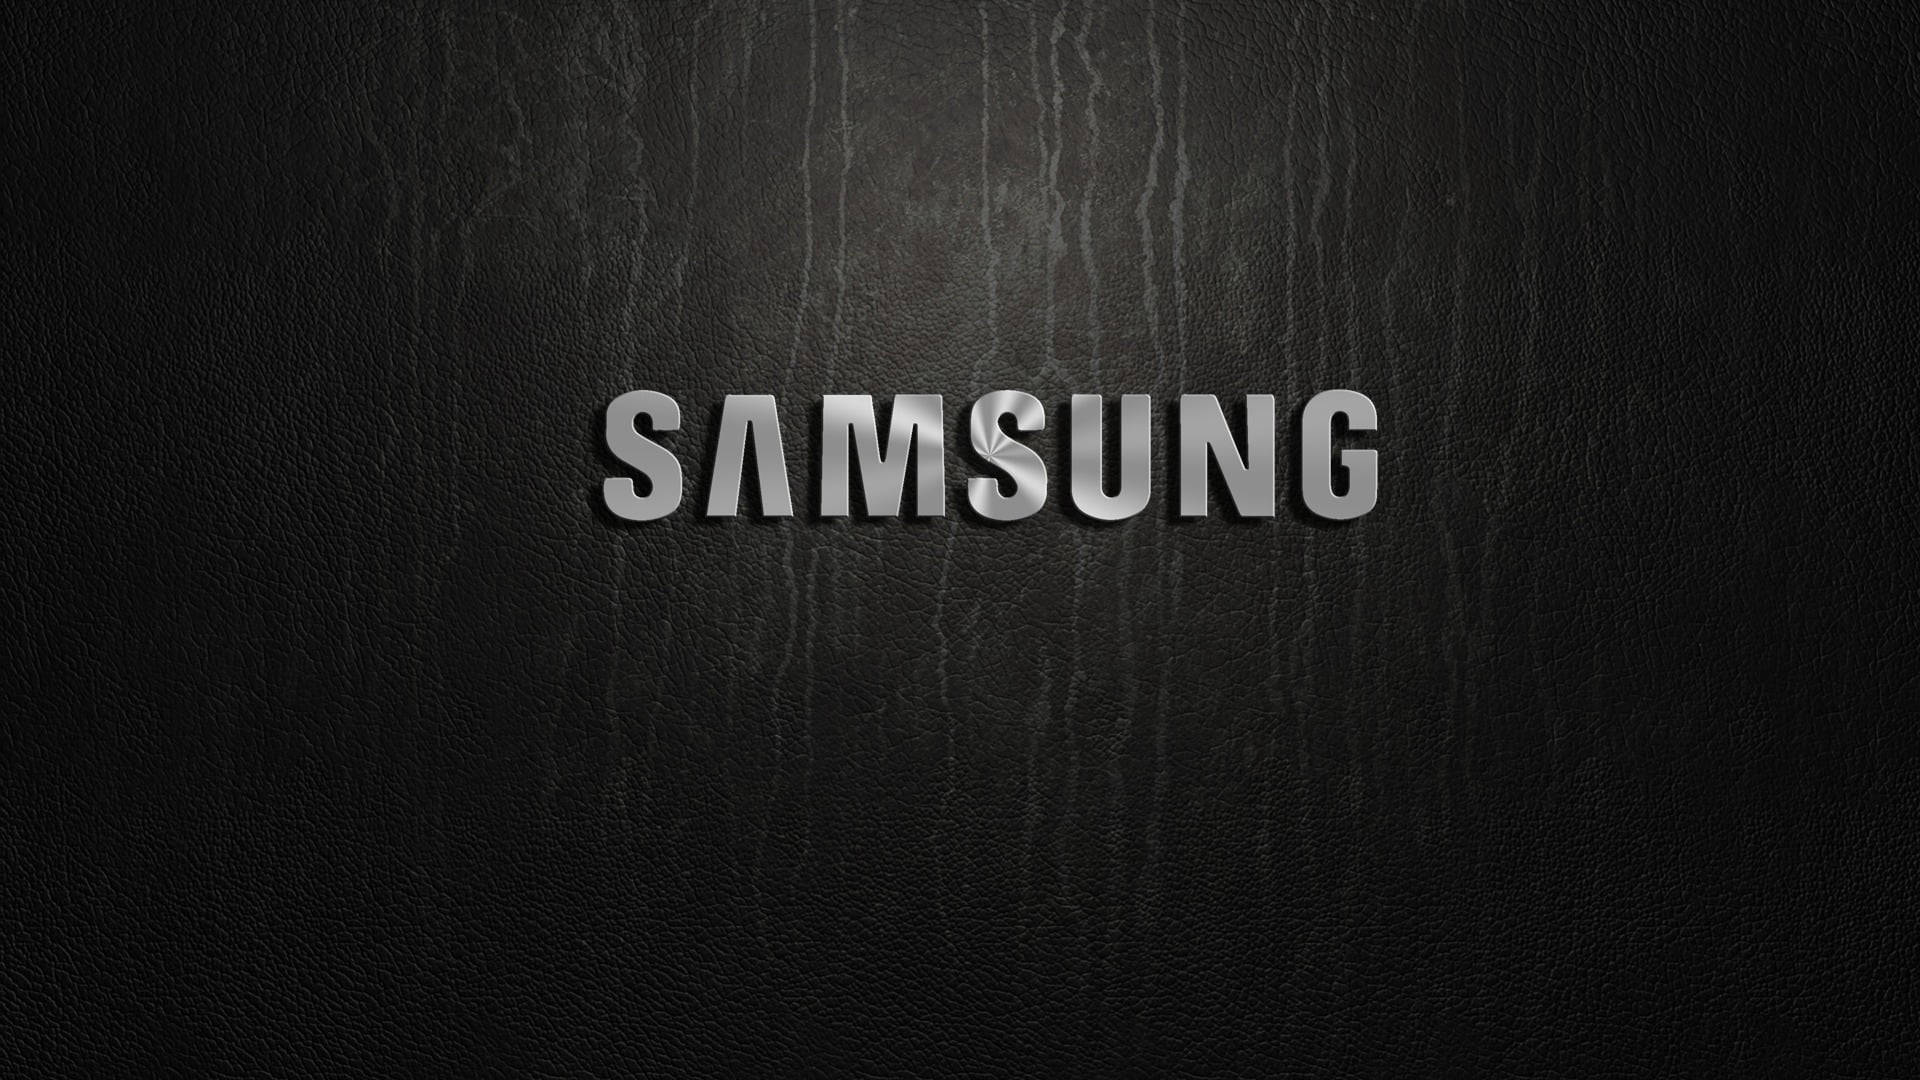 Samsung Black Background Wallpaper